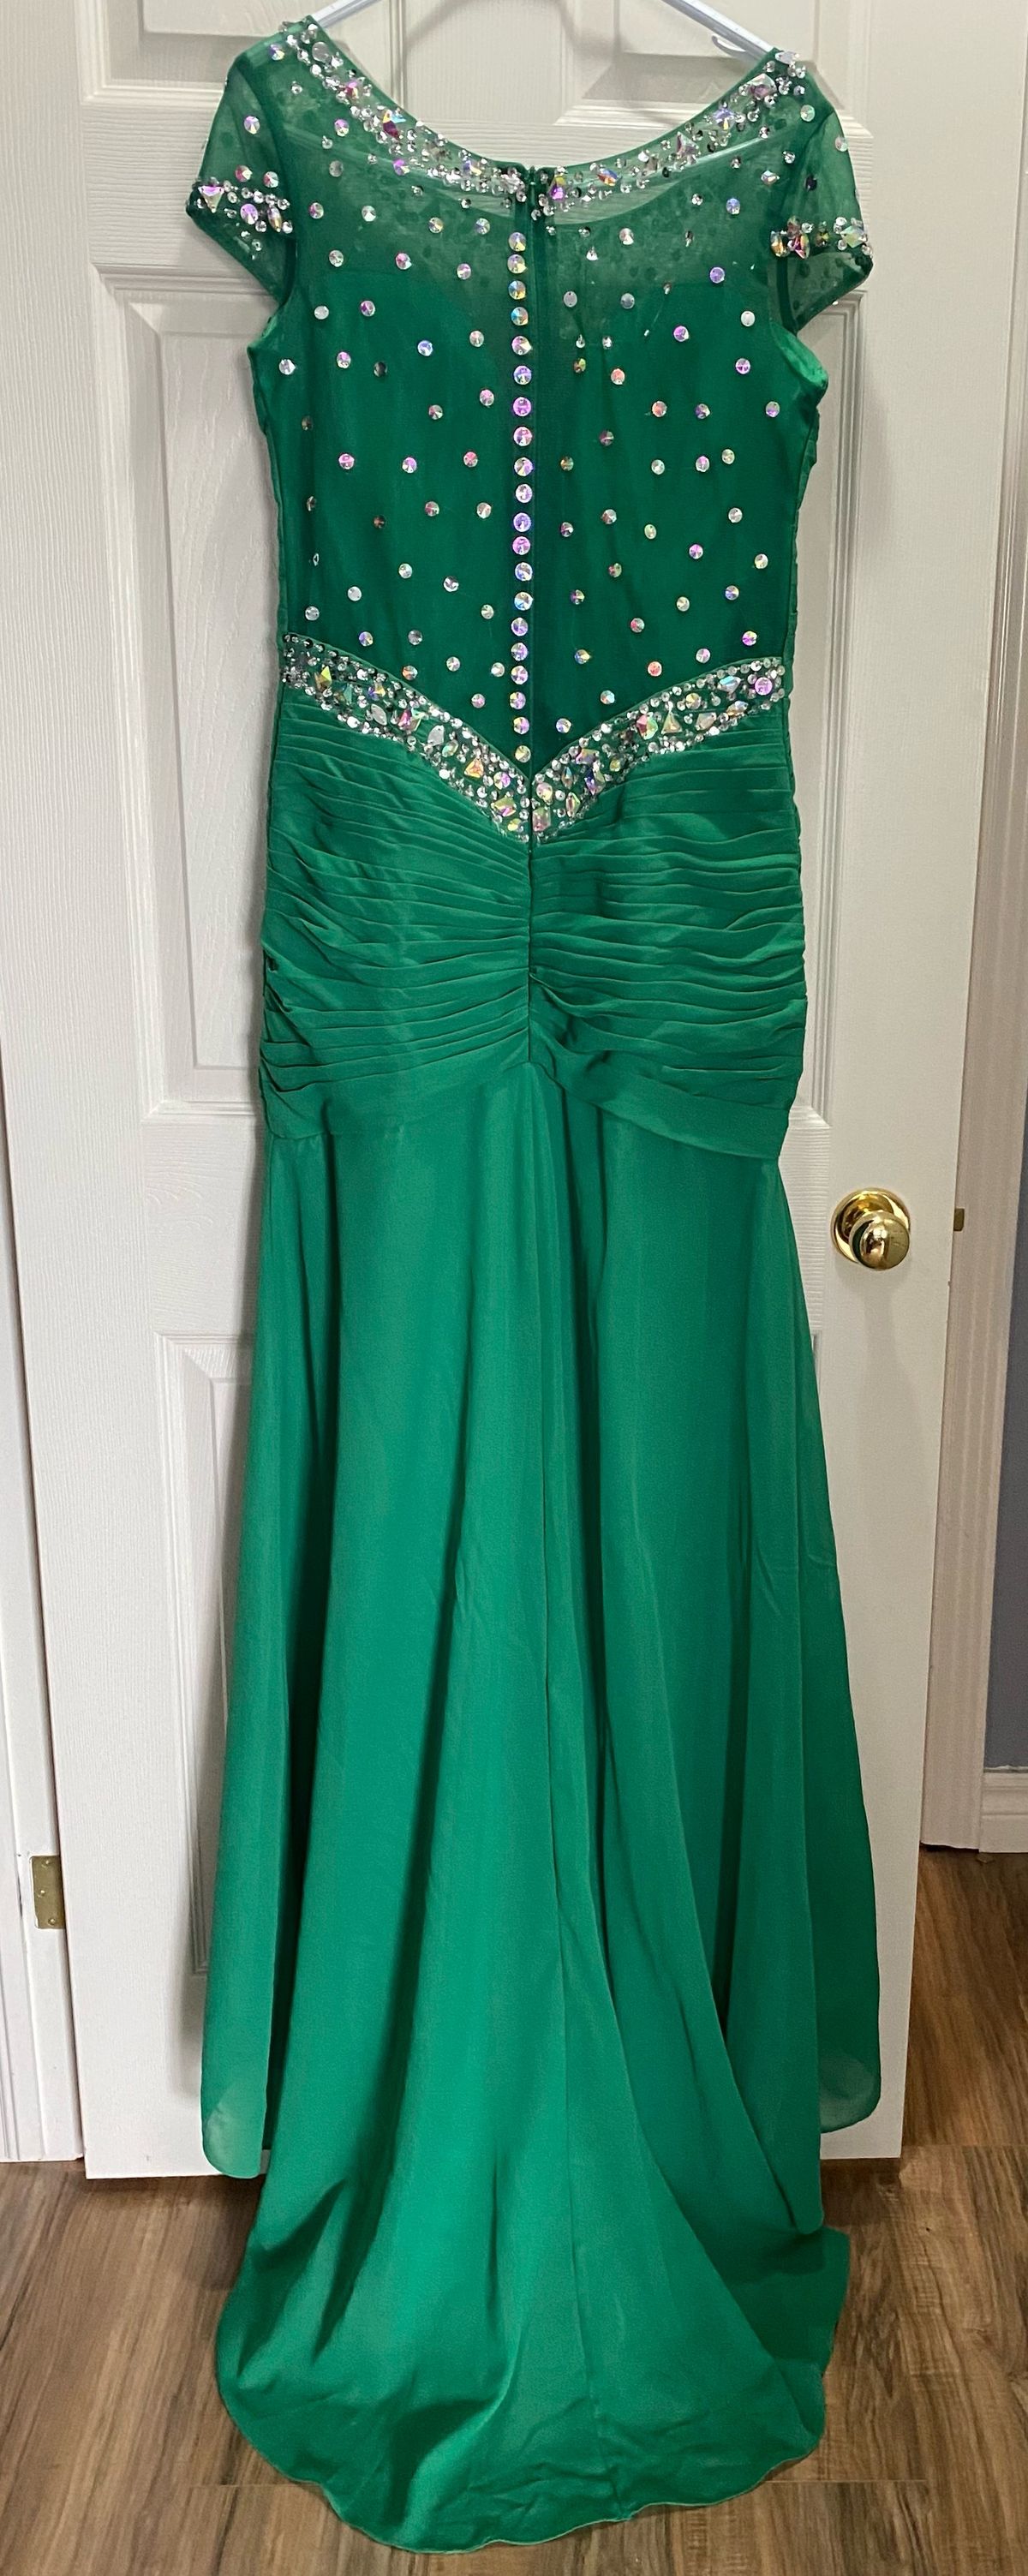 Size 8 Cap Sleeve Green Mermaid Dress on Queenly